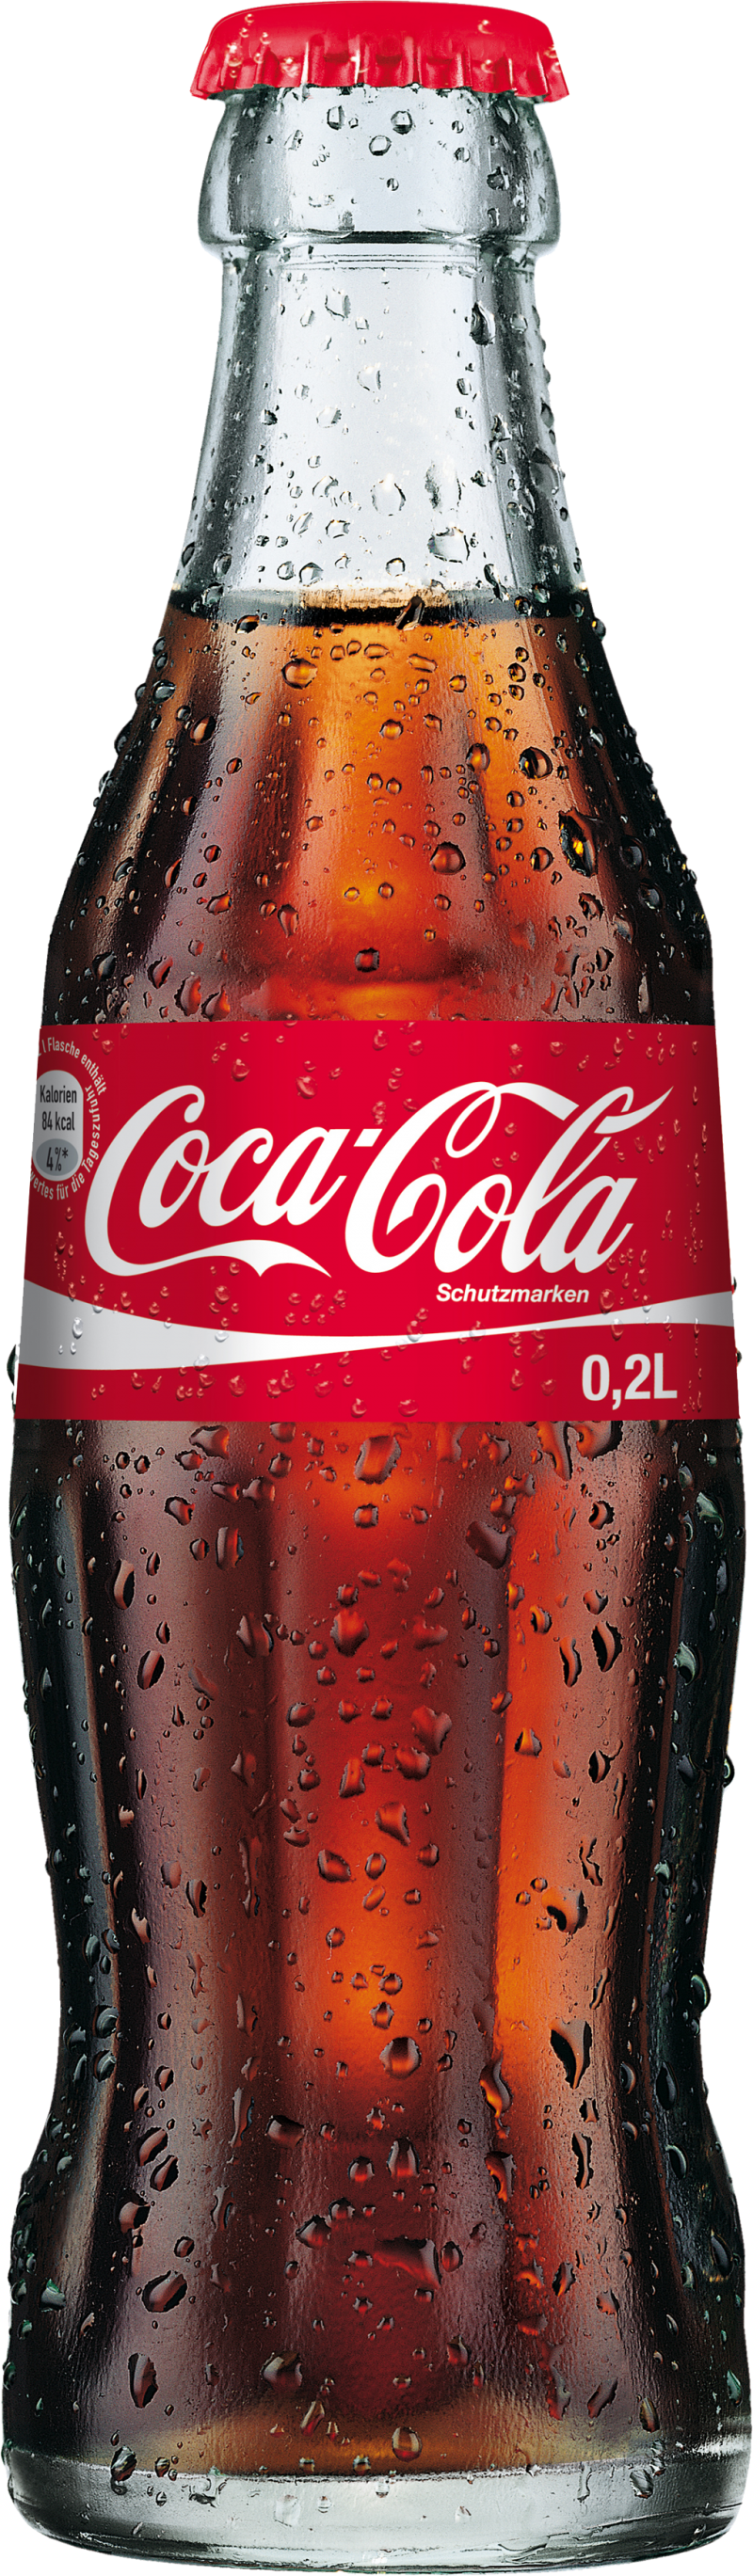 Coca Cola Bottle PNG Image - PurePNG | Free transparent ...